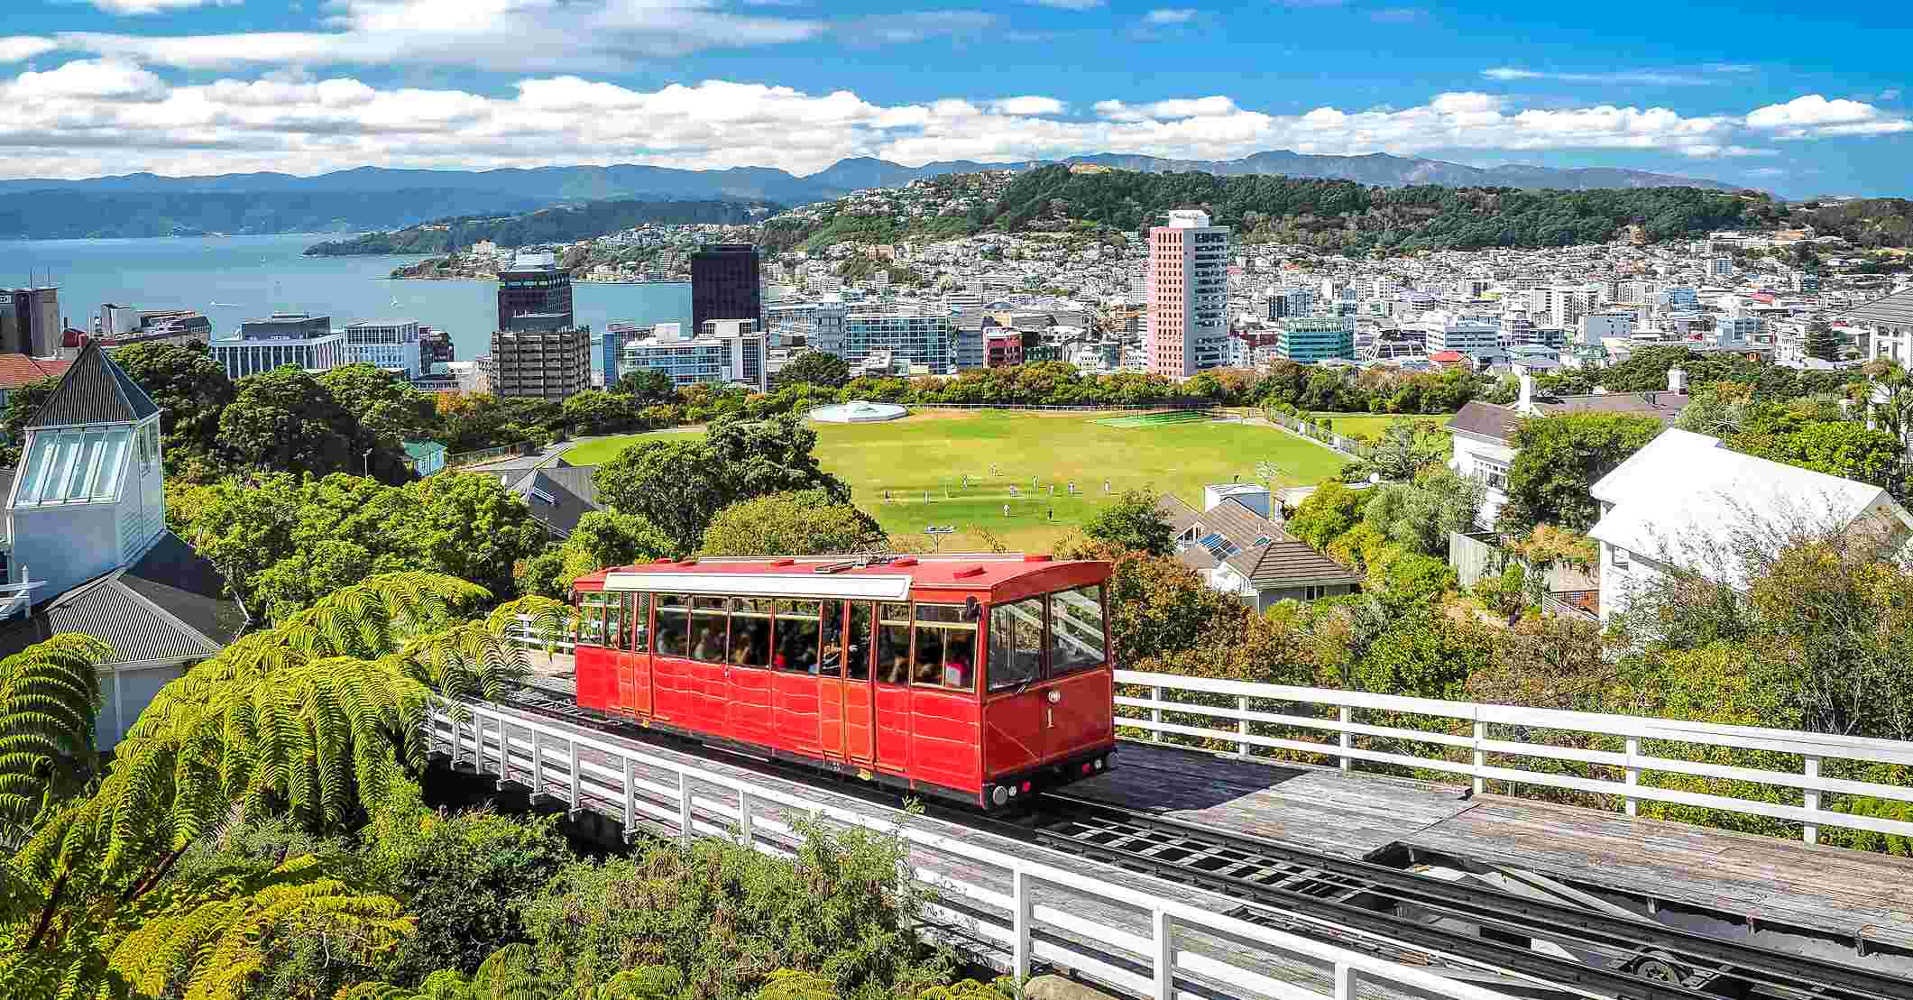 Wellington Cable Car, The most famous landmark in Wellington.